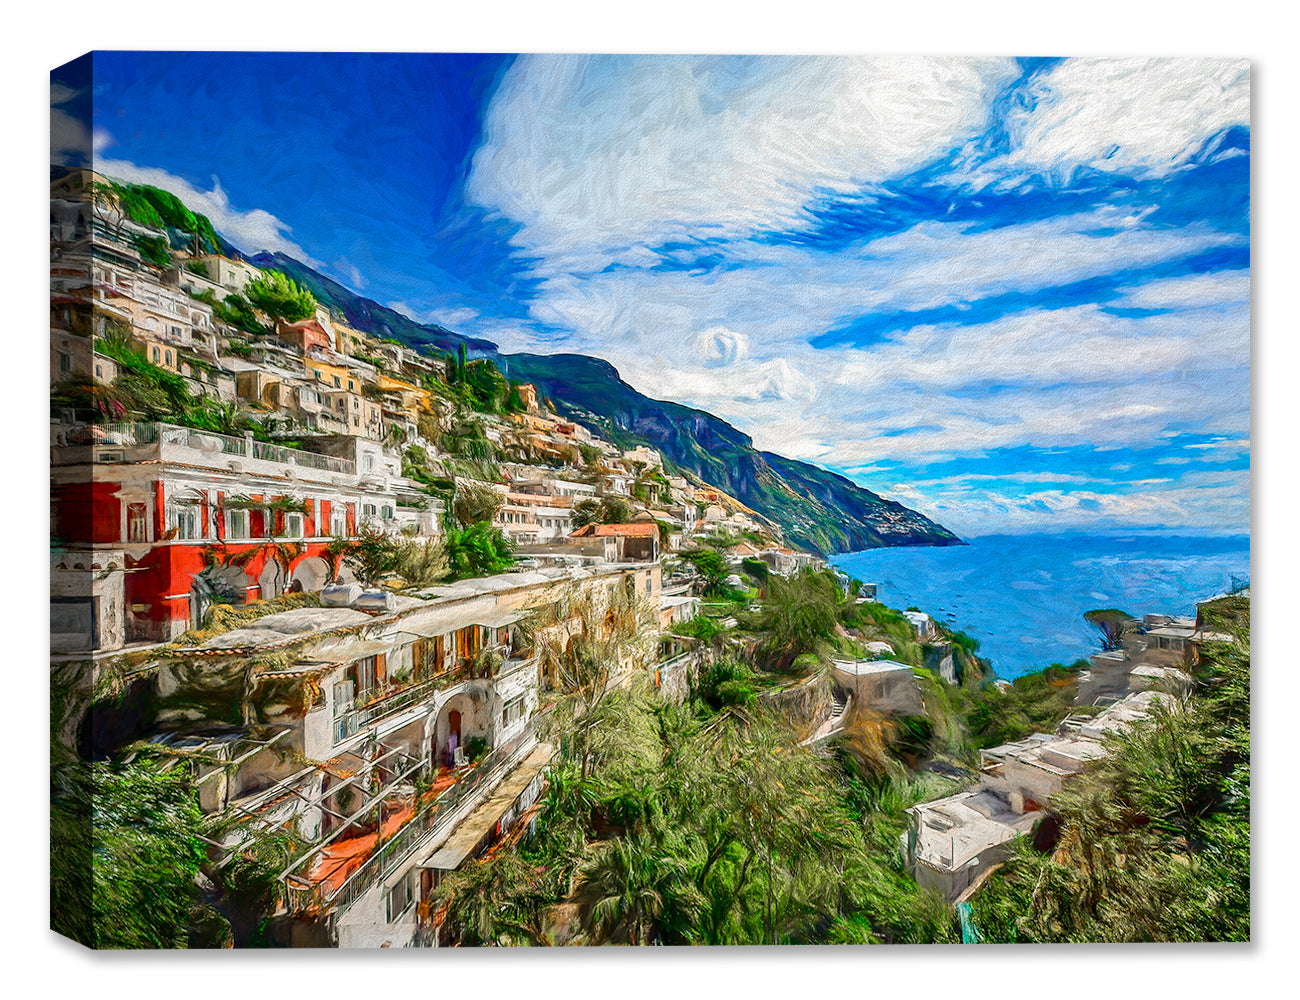 Amalfi Coast in Italy - Canvas Art Painting